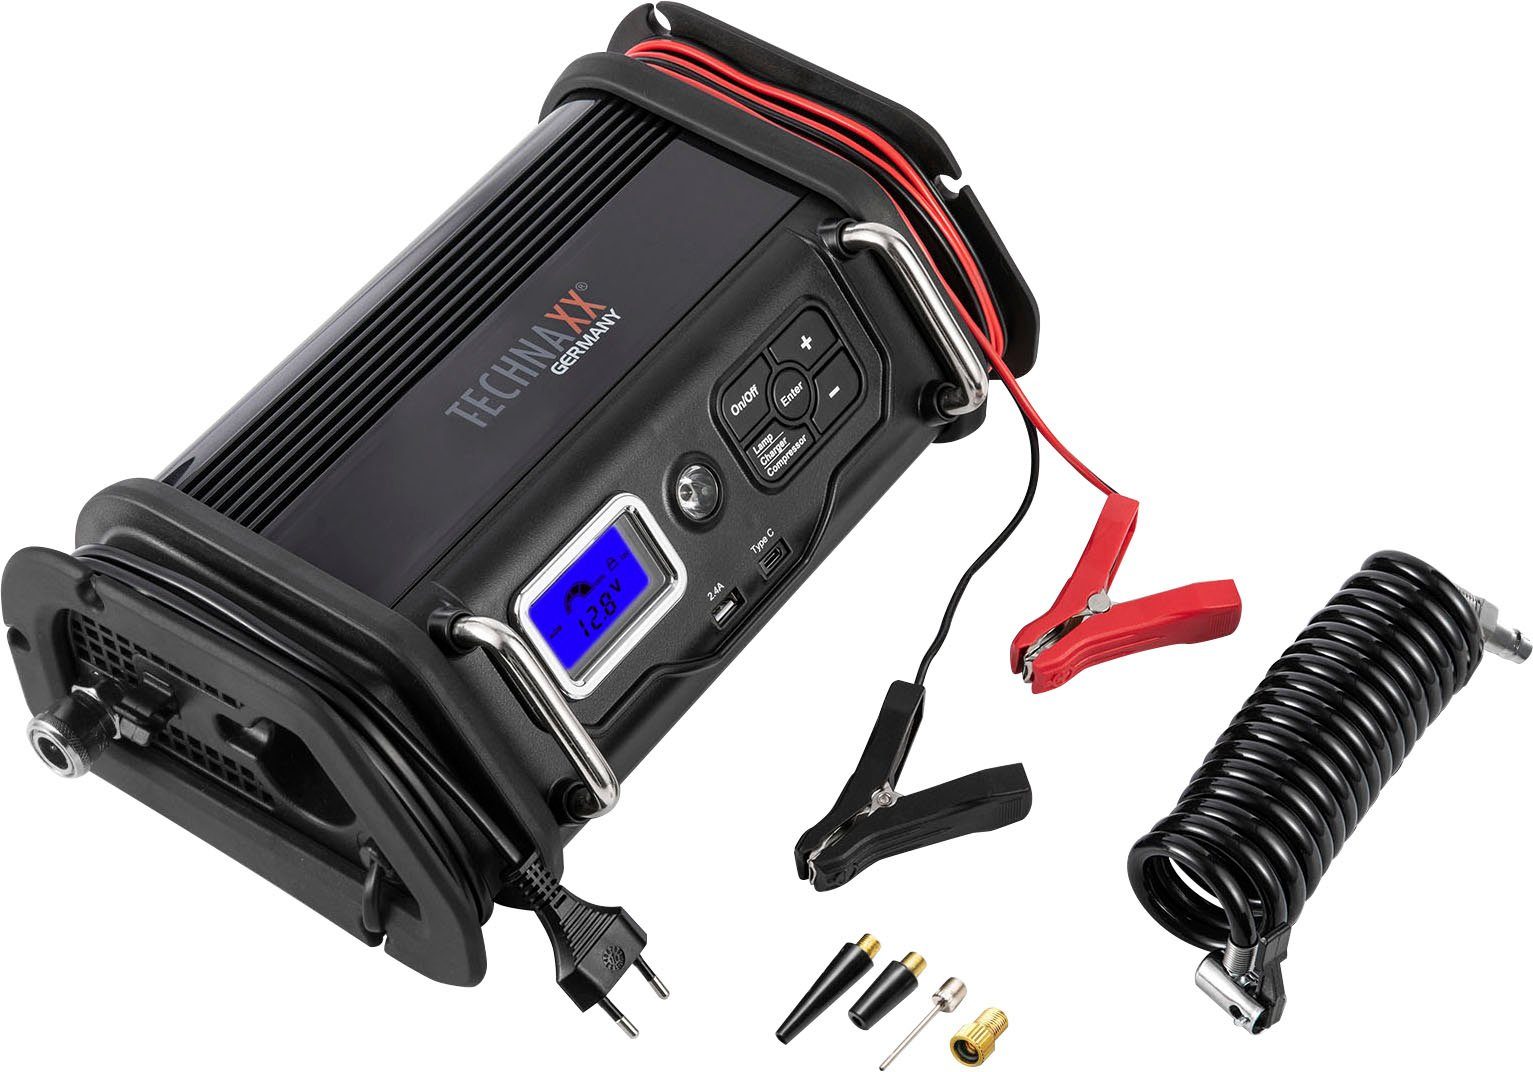 Technaxx TX-193 Batterie-Ladegerät (1000 mA, mit Kompressor), Kurzschluss-,  Verpolungs-, Überhitzungs- und Überladeschutz